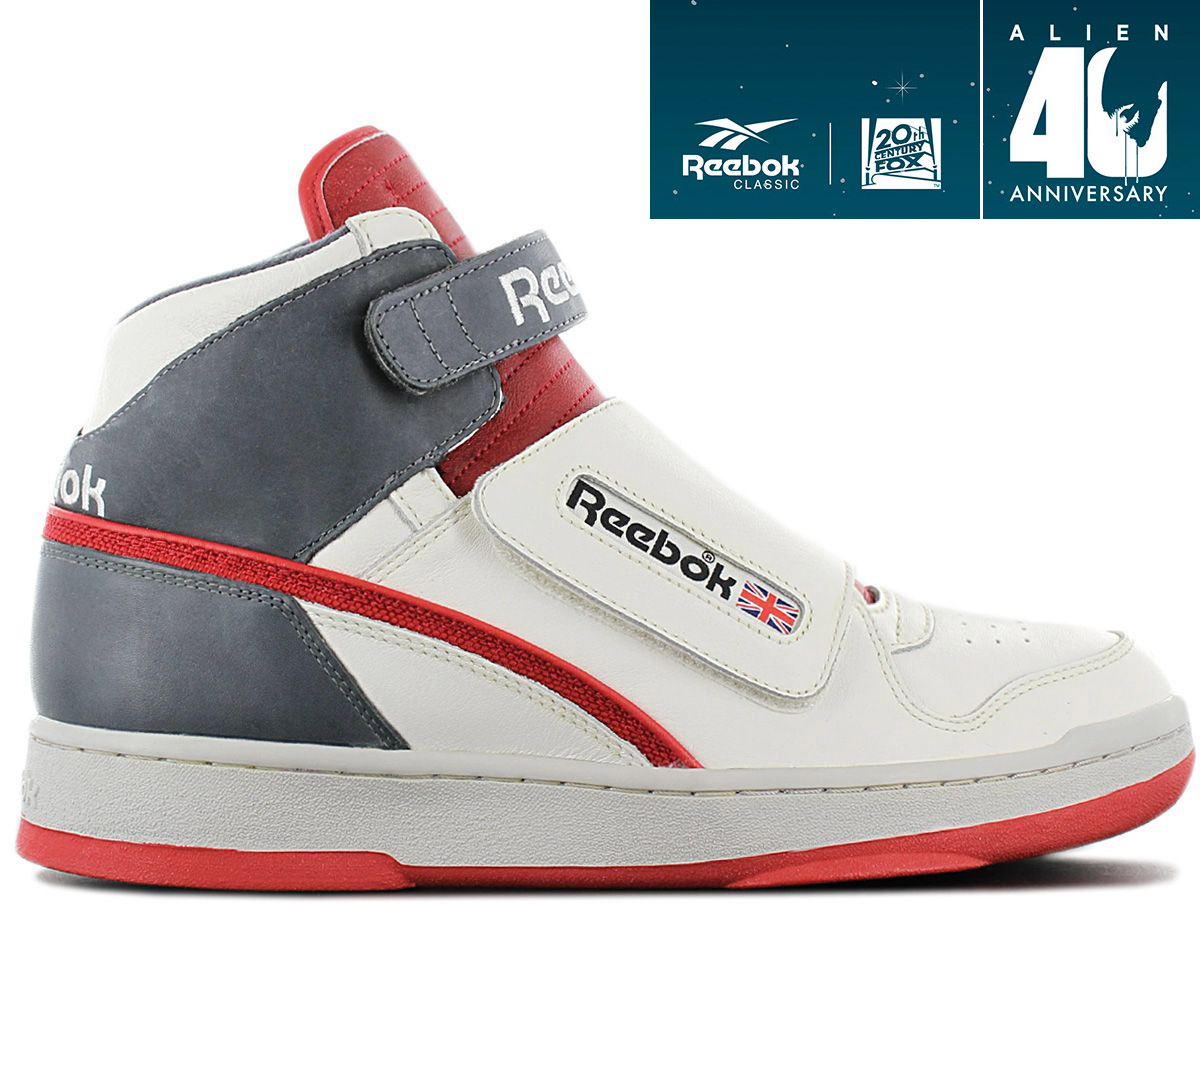 Reebok Alien Stomper Bishop - 40th Anniversary - DV8578 Shoes Sneaker  Limited | eBay